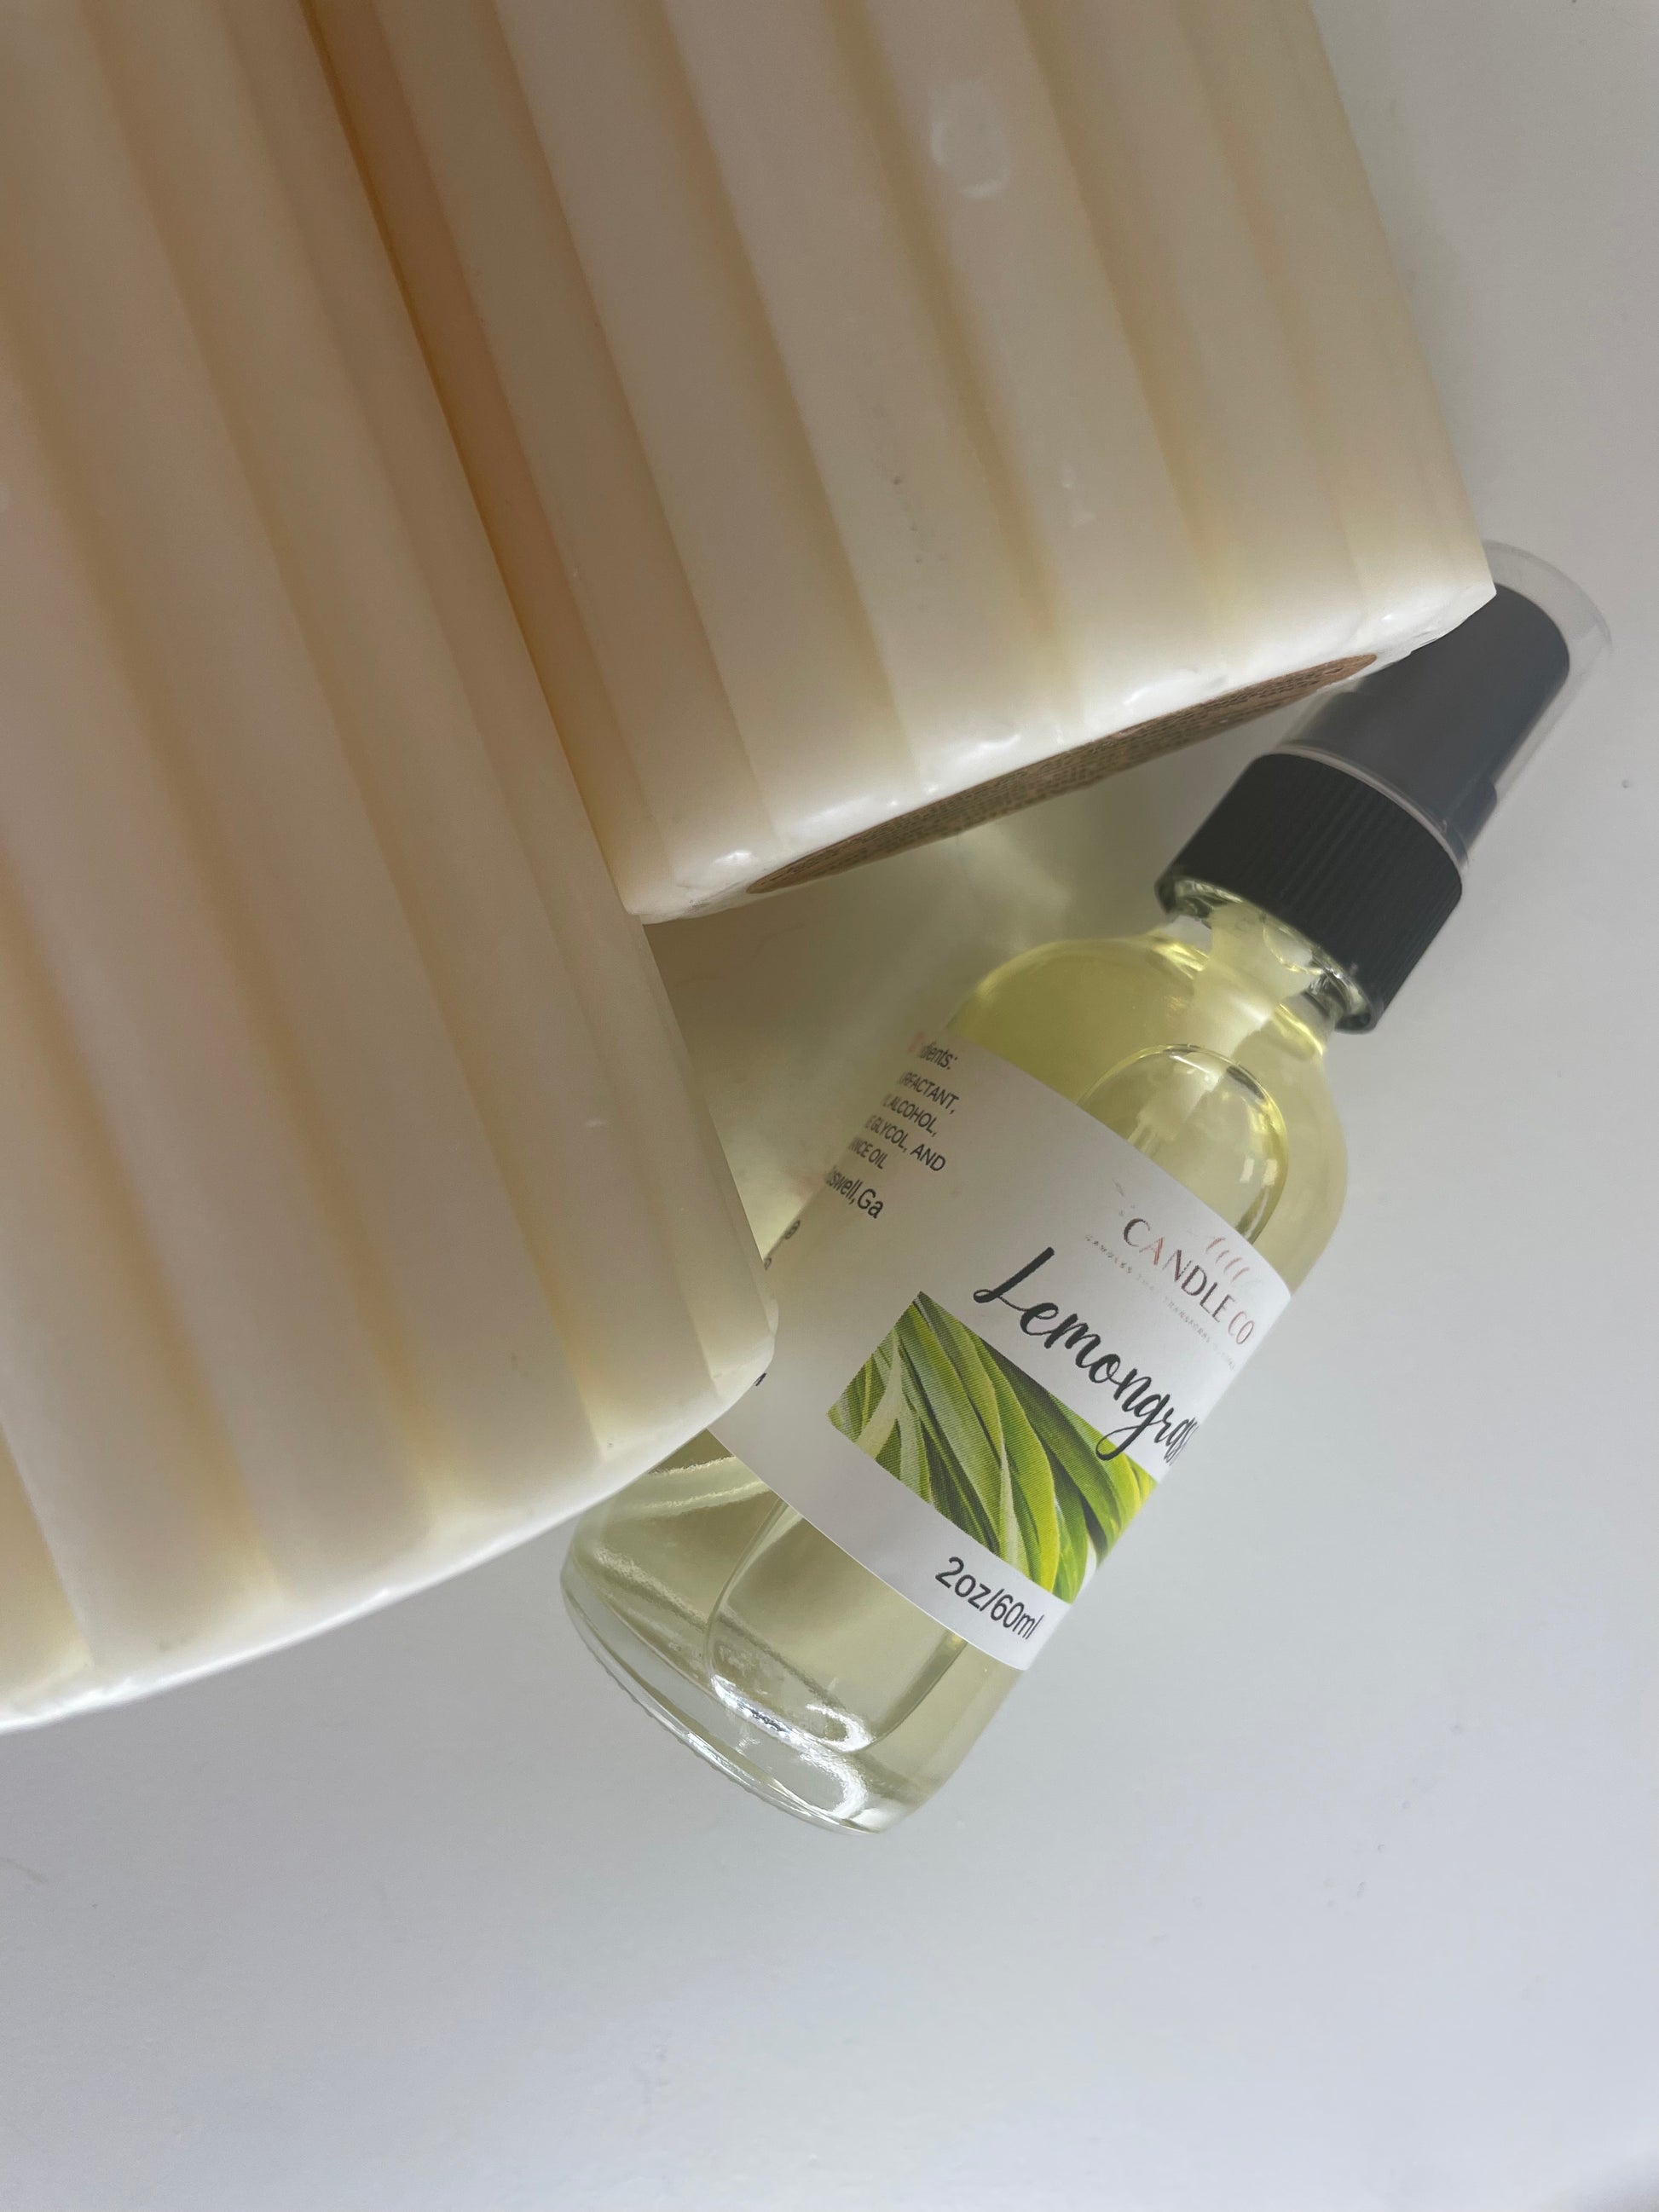 Lemongrass Linen/Room Spray that has a delicate aroma!